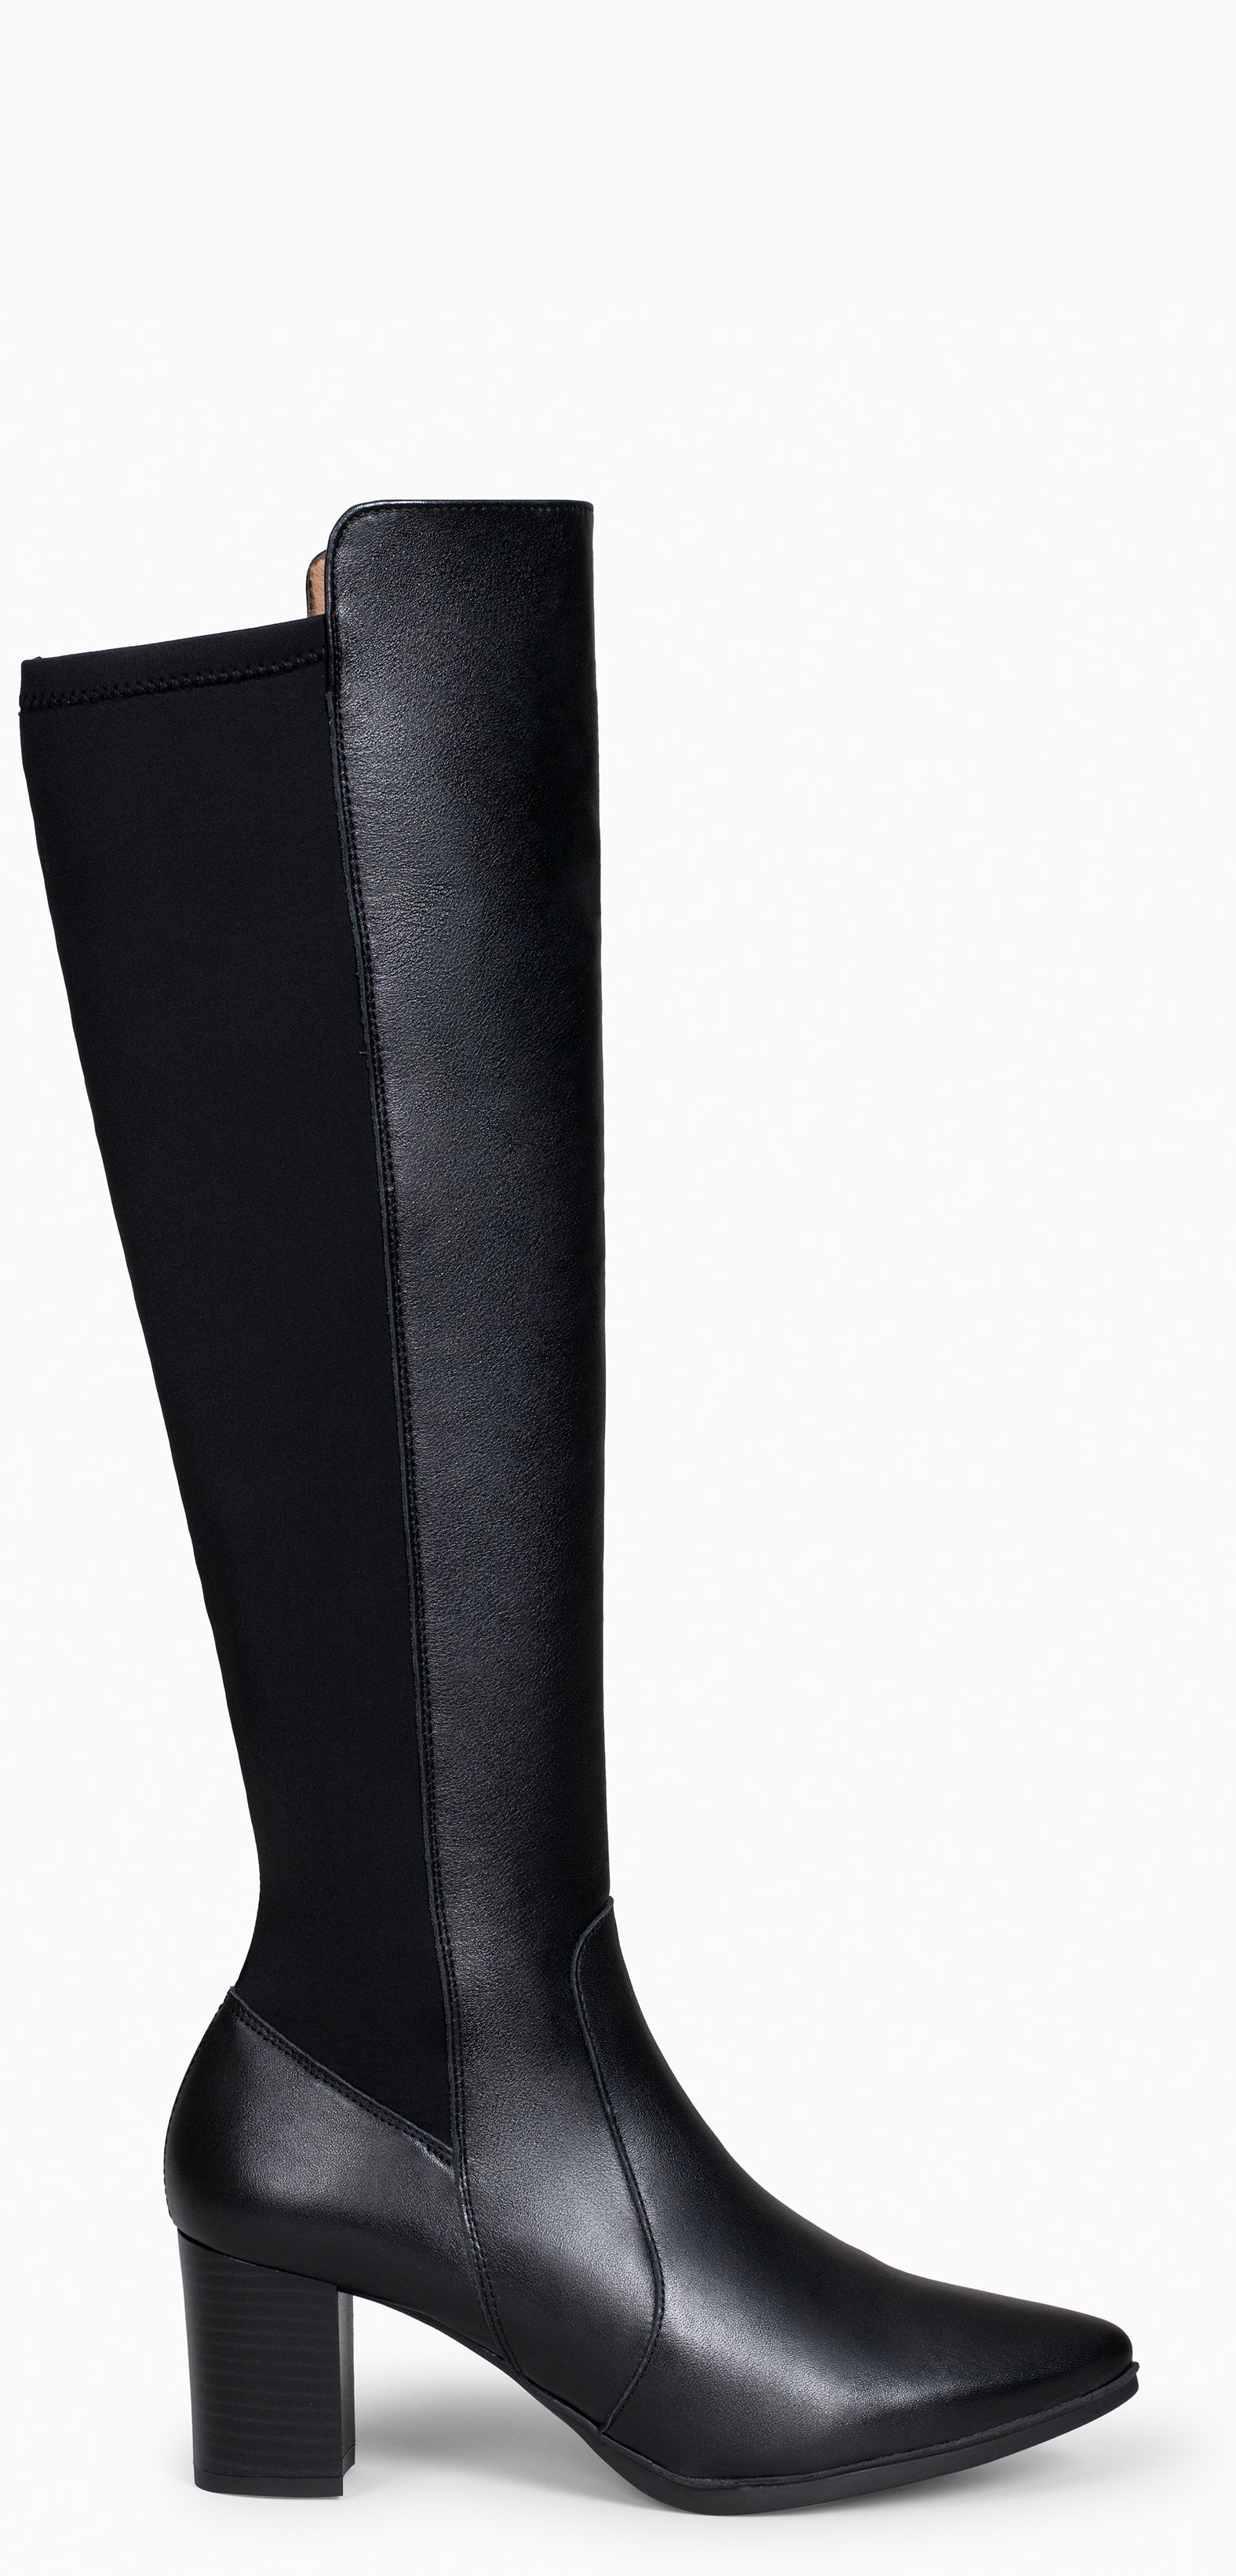 SUNSET – BLACK Elastic Heeled Boots nappa